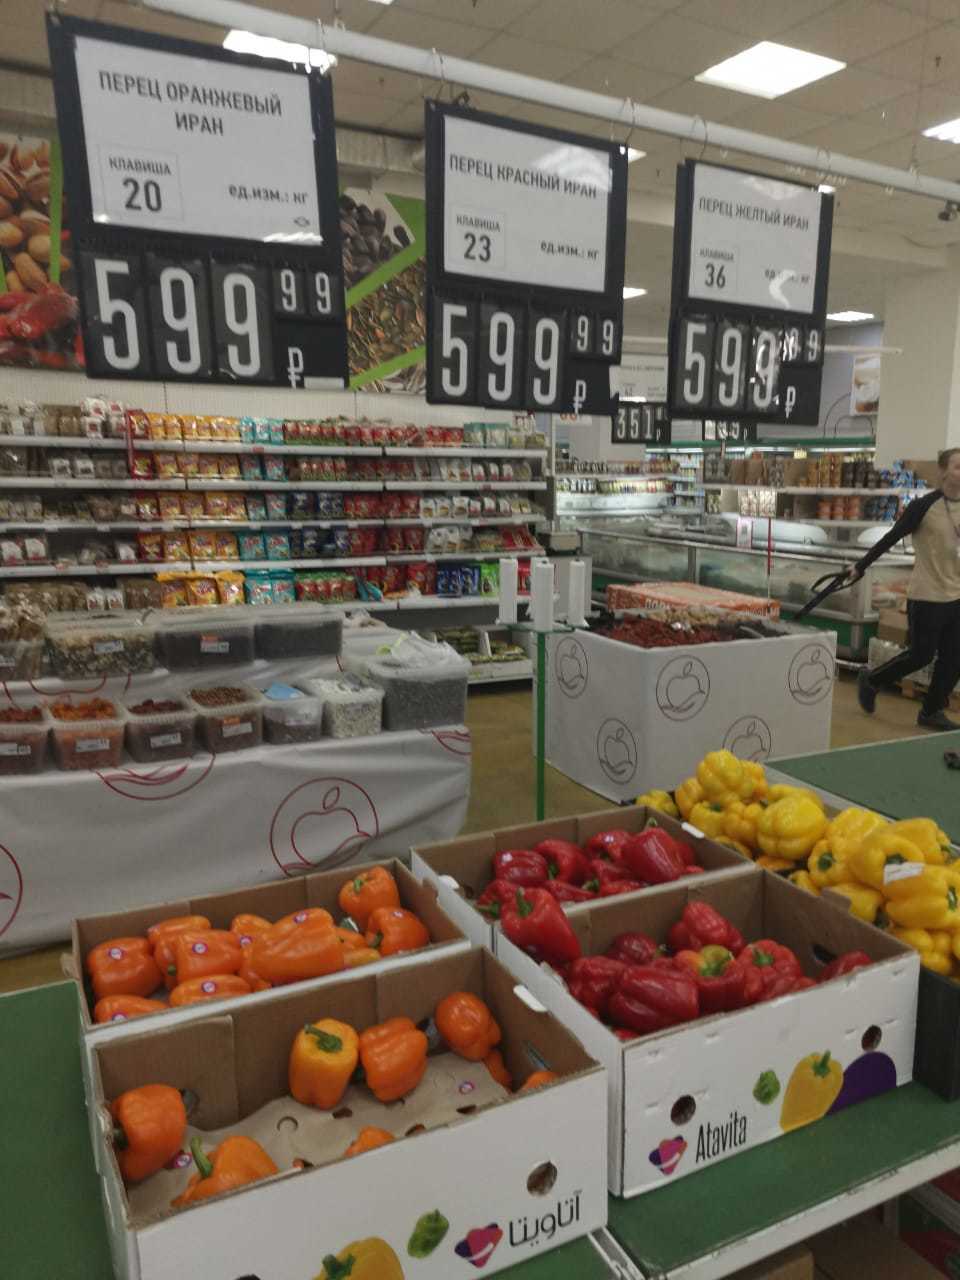 Tomato virus has reached Khabarovsk - Coronavirus, Prices, Tomatoes, Stock, Discounts, Longpost, Speculation, Negative